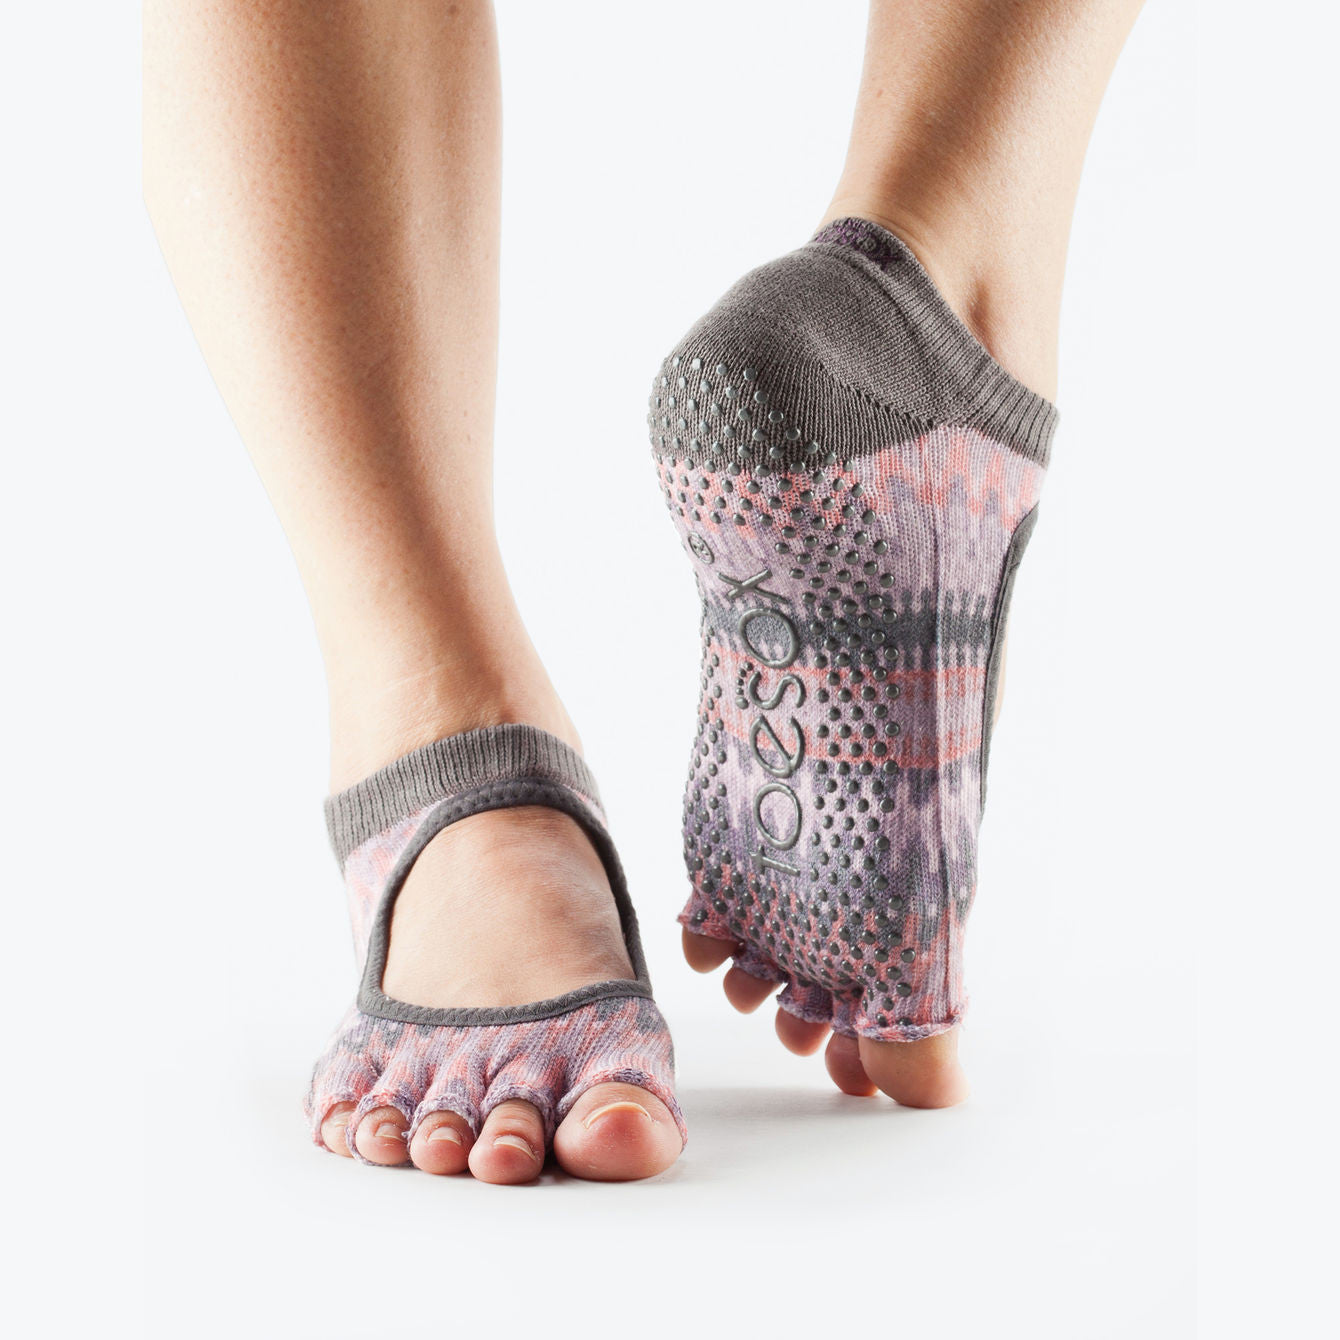 Bellarina Half Toe Grip Socks